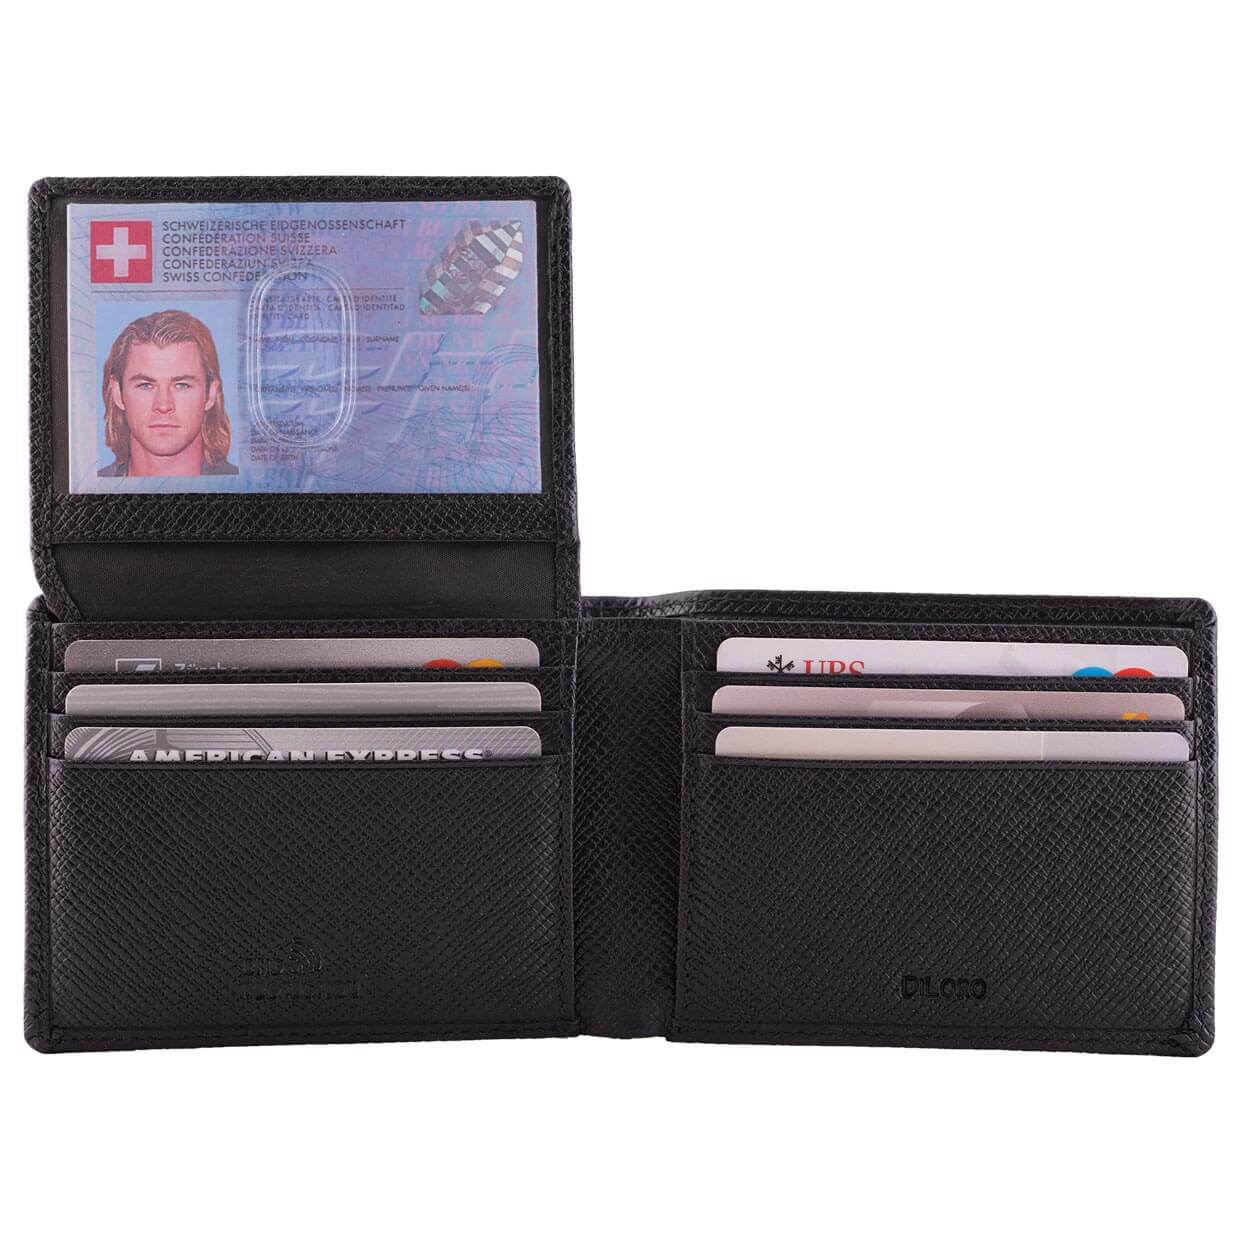 DiLoro Men's Slim Bifold Leather Wallet 2 ID Windows Black Saffiano - Open View with ID Window Open